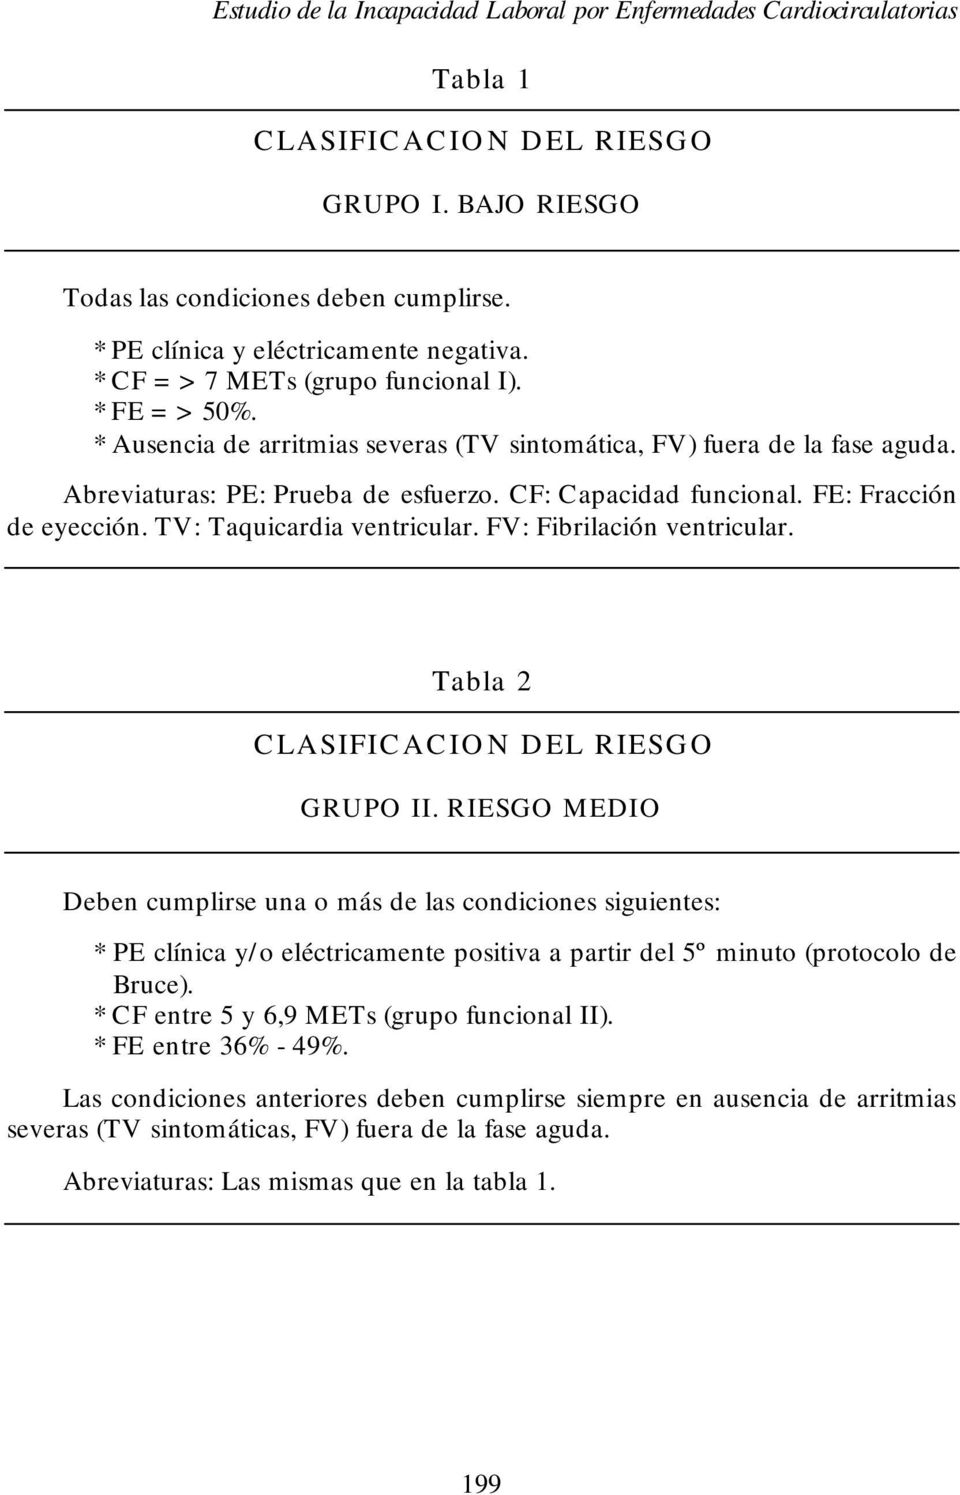 FE: Fracción de eyección. TV: Taquicardia ventricular. FV:Fibrilación ventricular. Tabla 2 GRUPO II.